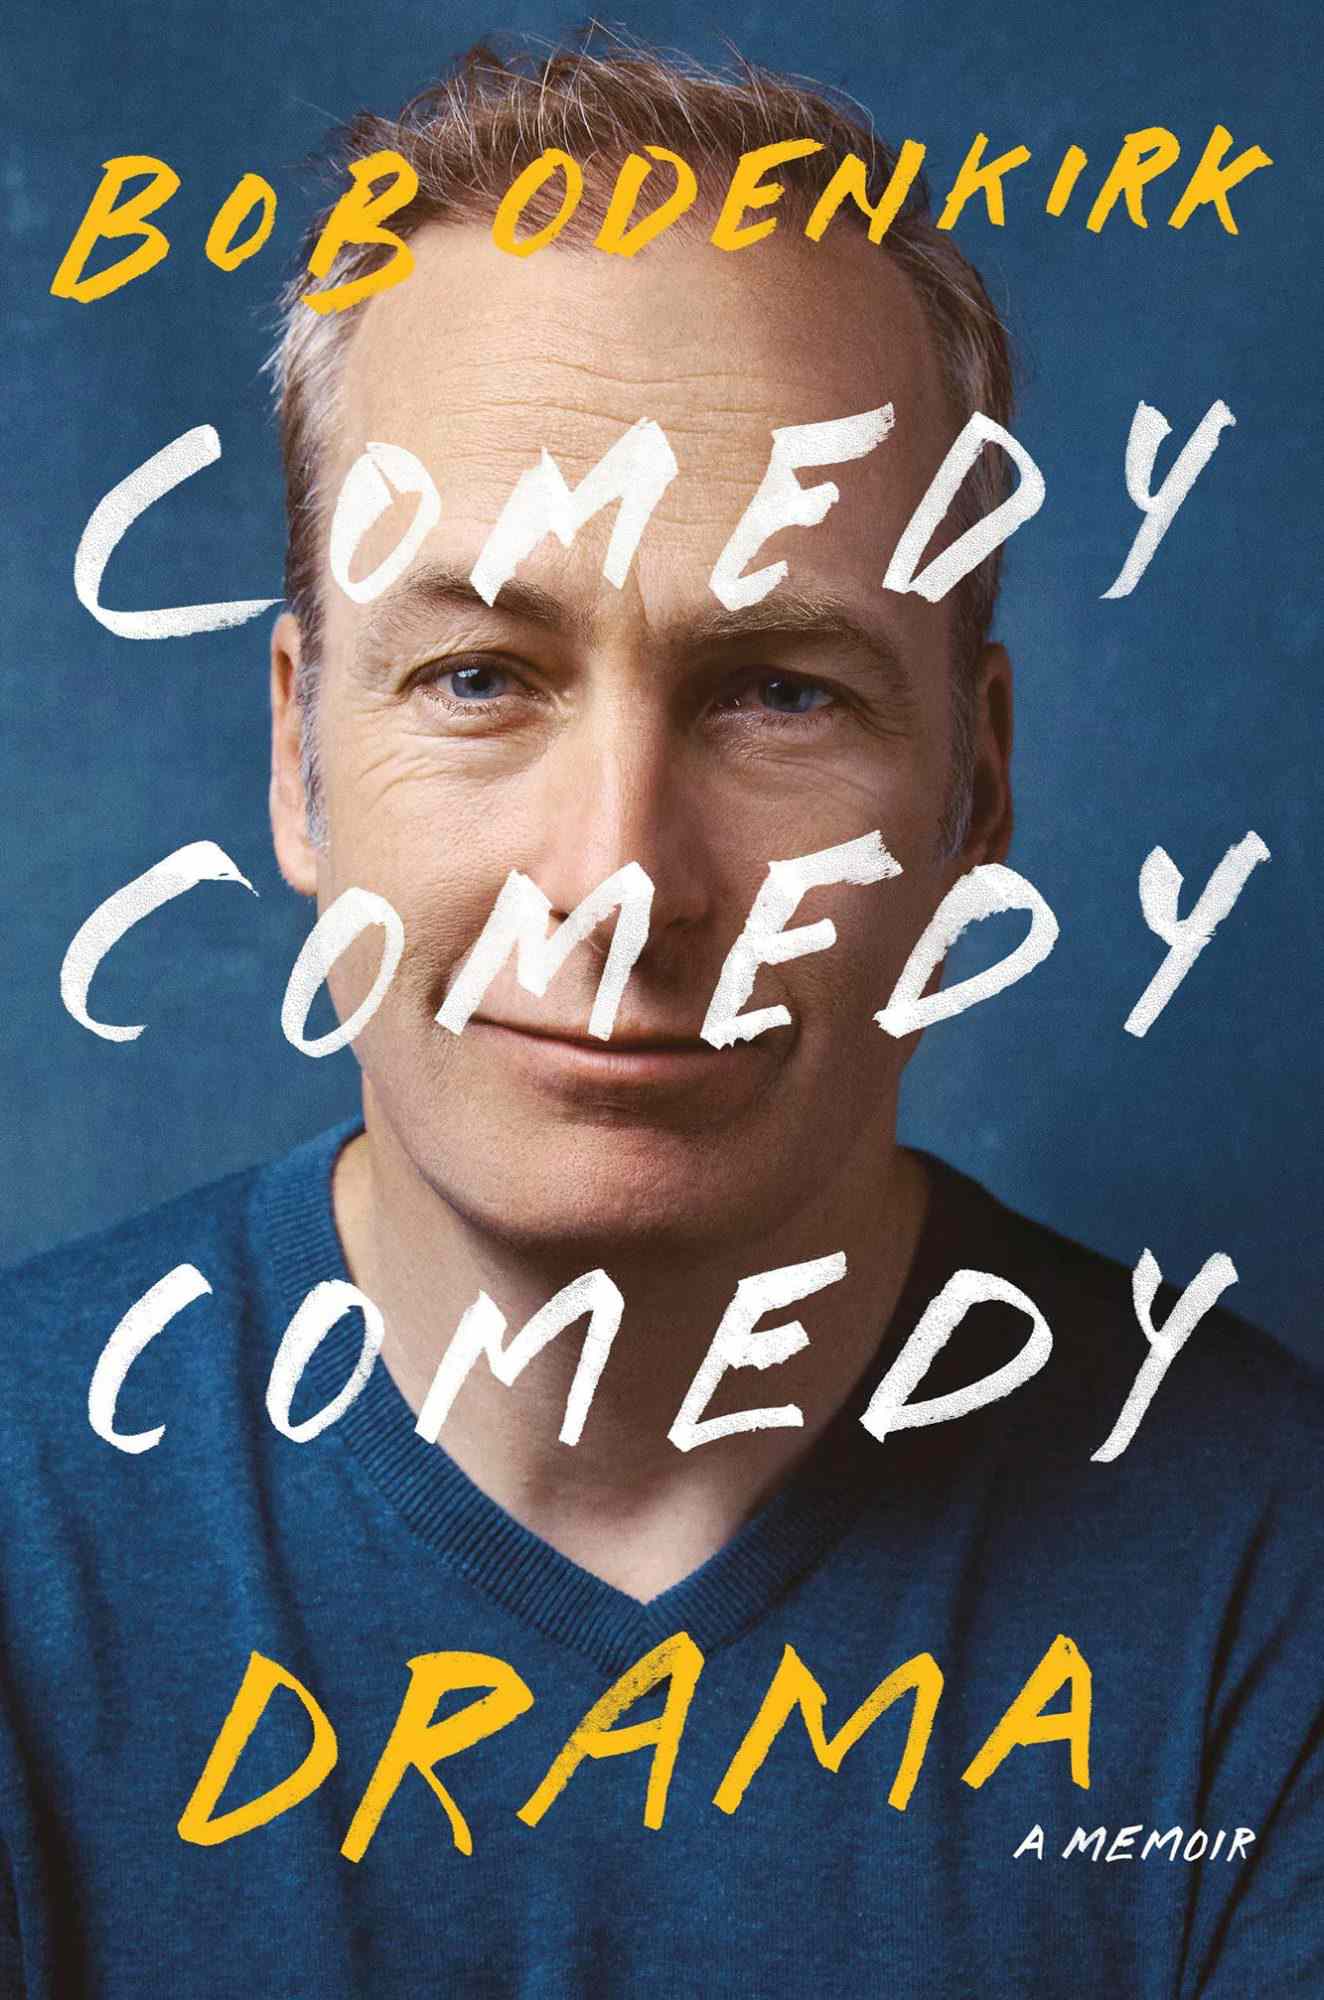 Comedy Comedy Comedy Drama by Bob Odenkirk